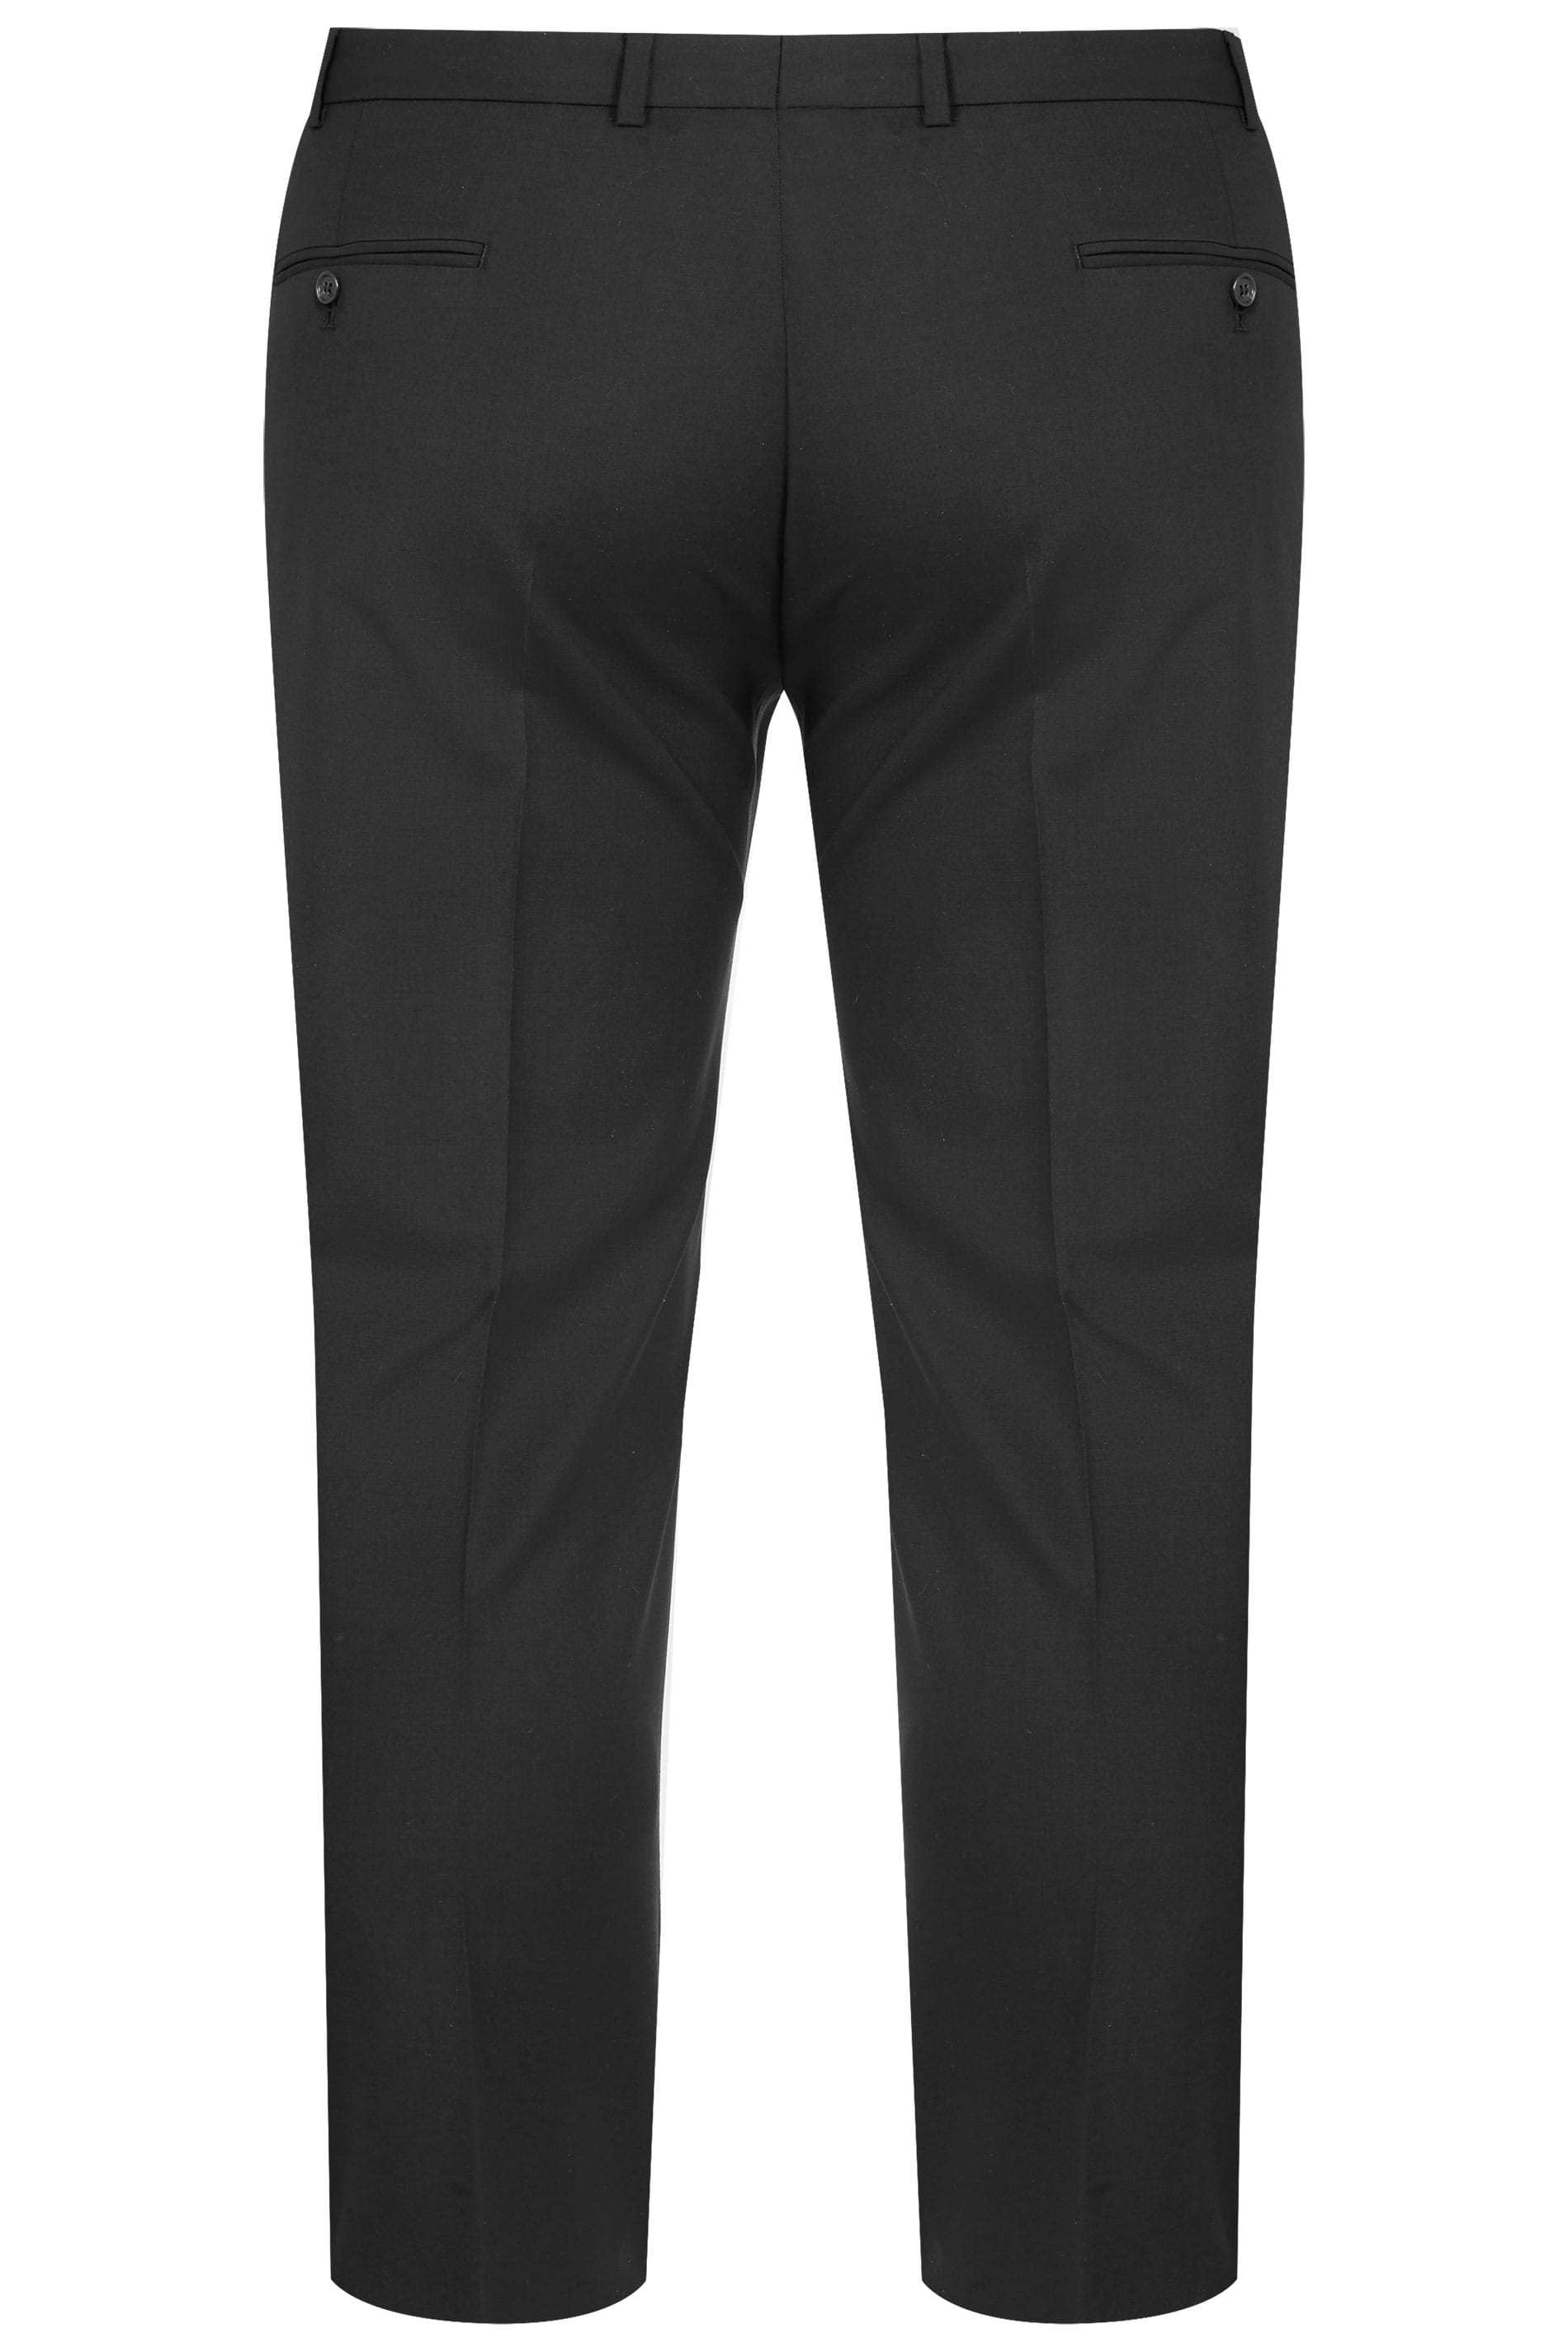 BadRhino Black Suit Trousers | Sizes 38